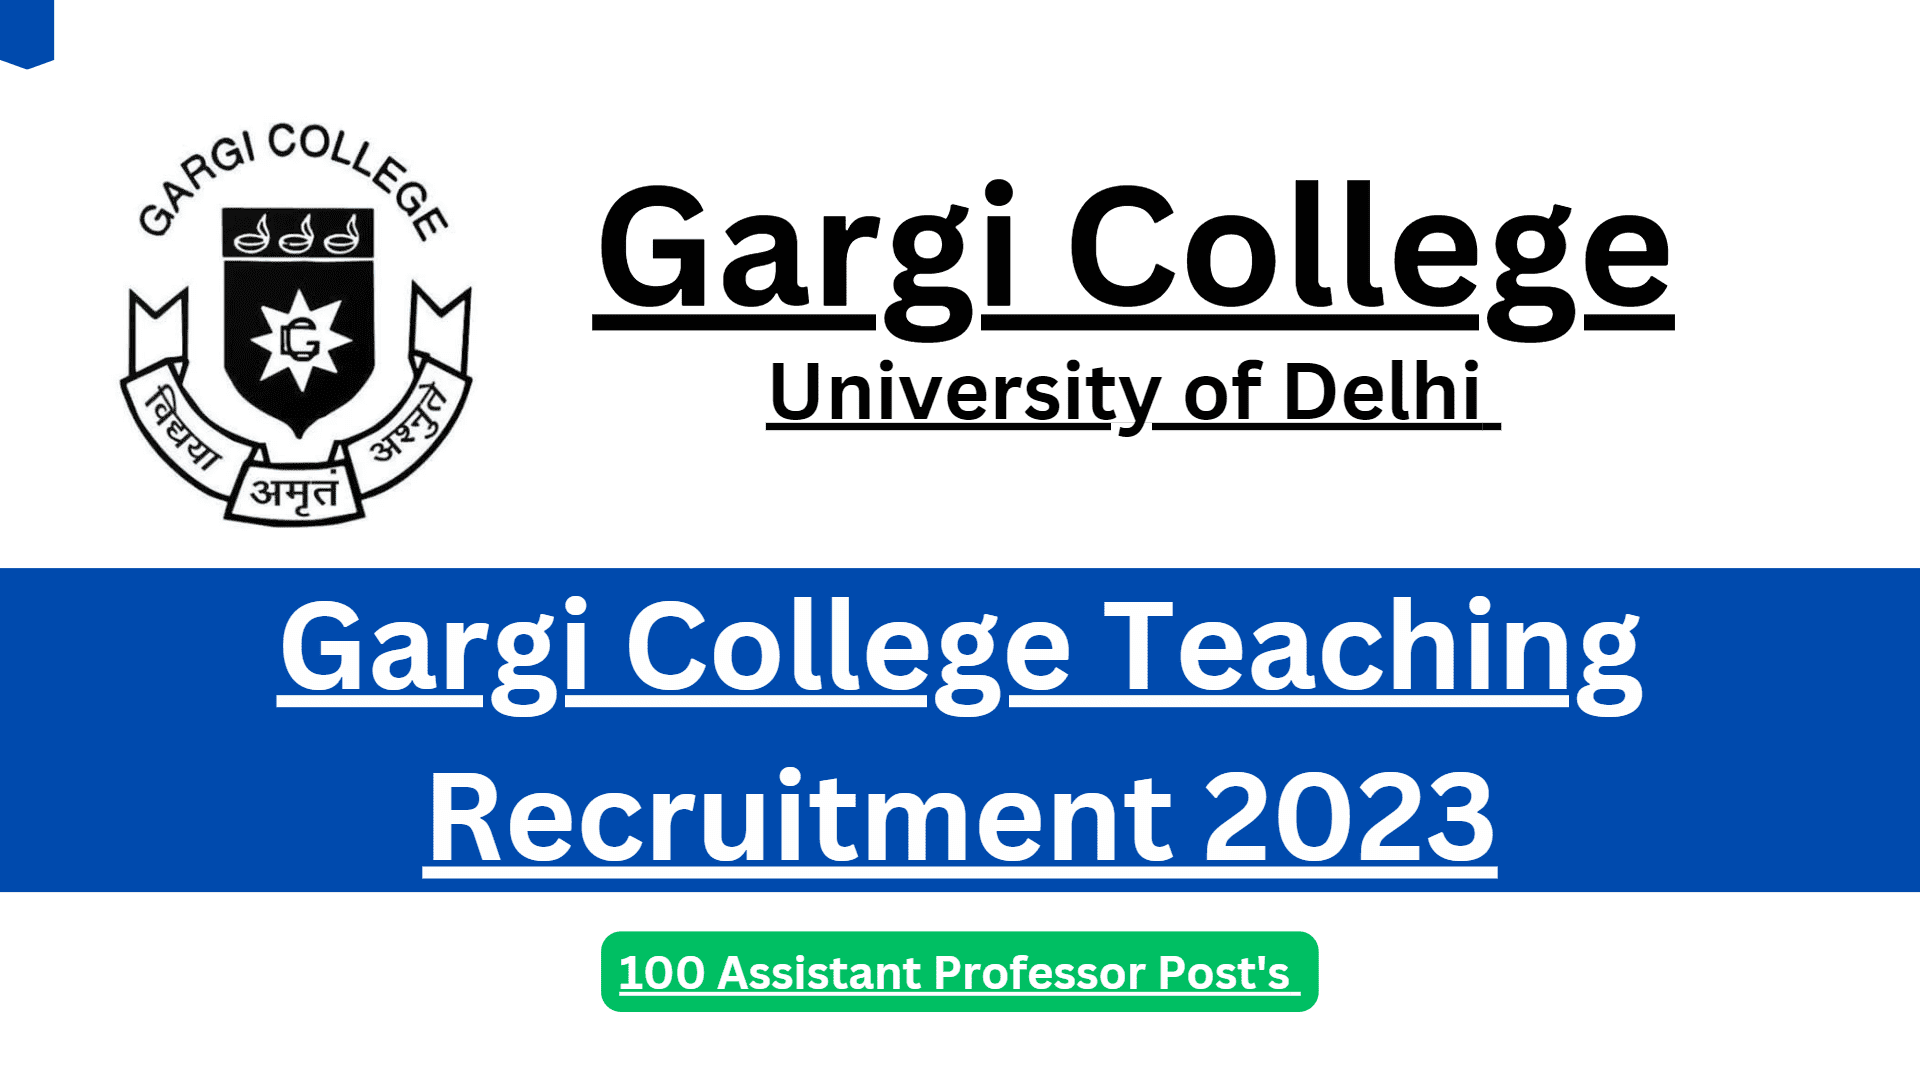 Gargi College Teaching Recruitment 2023